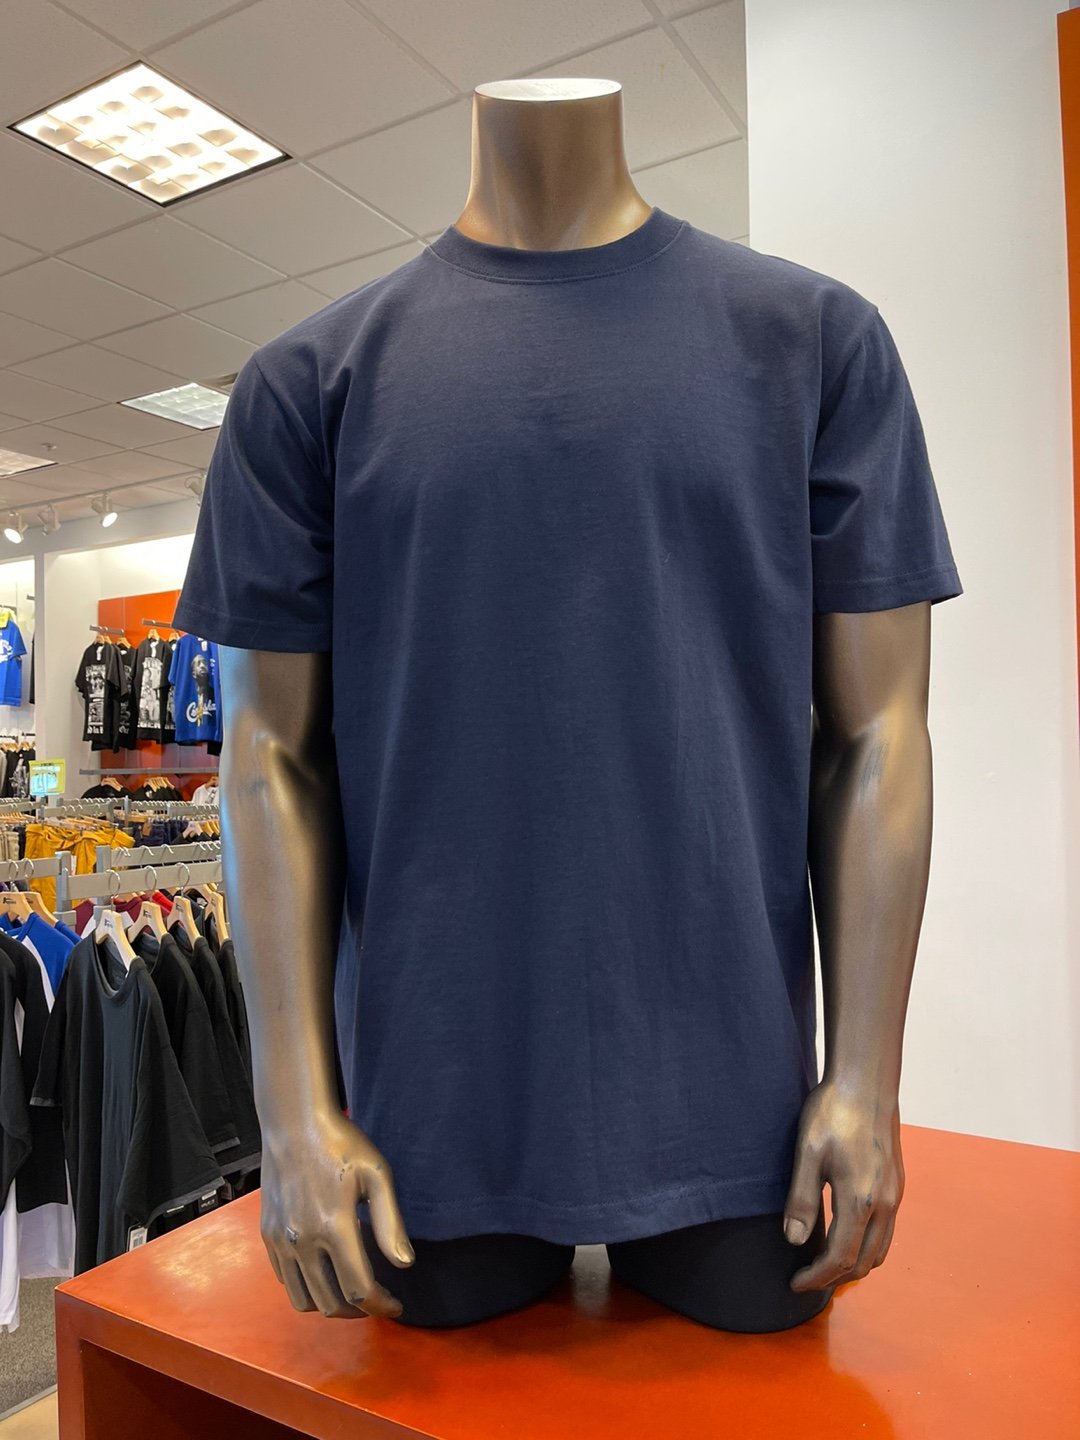 Pro 5 Superheavy Short Sleeve T-shirt,Royal Blue,3XL Tall